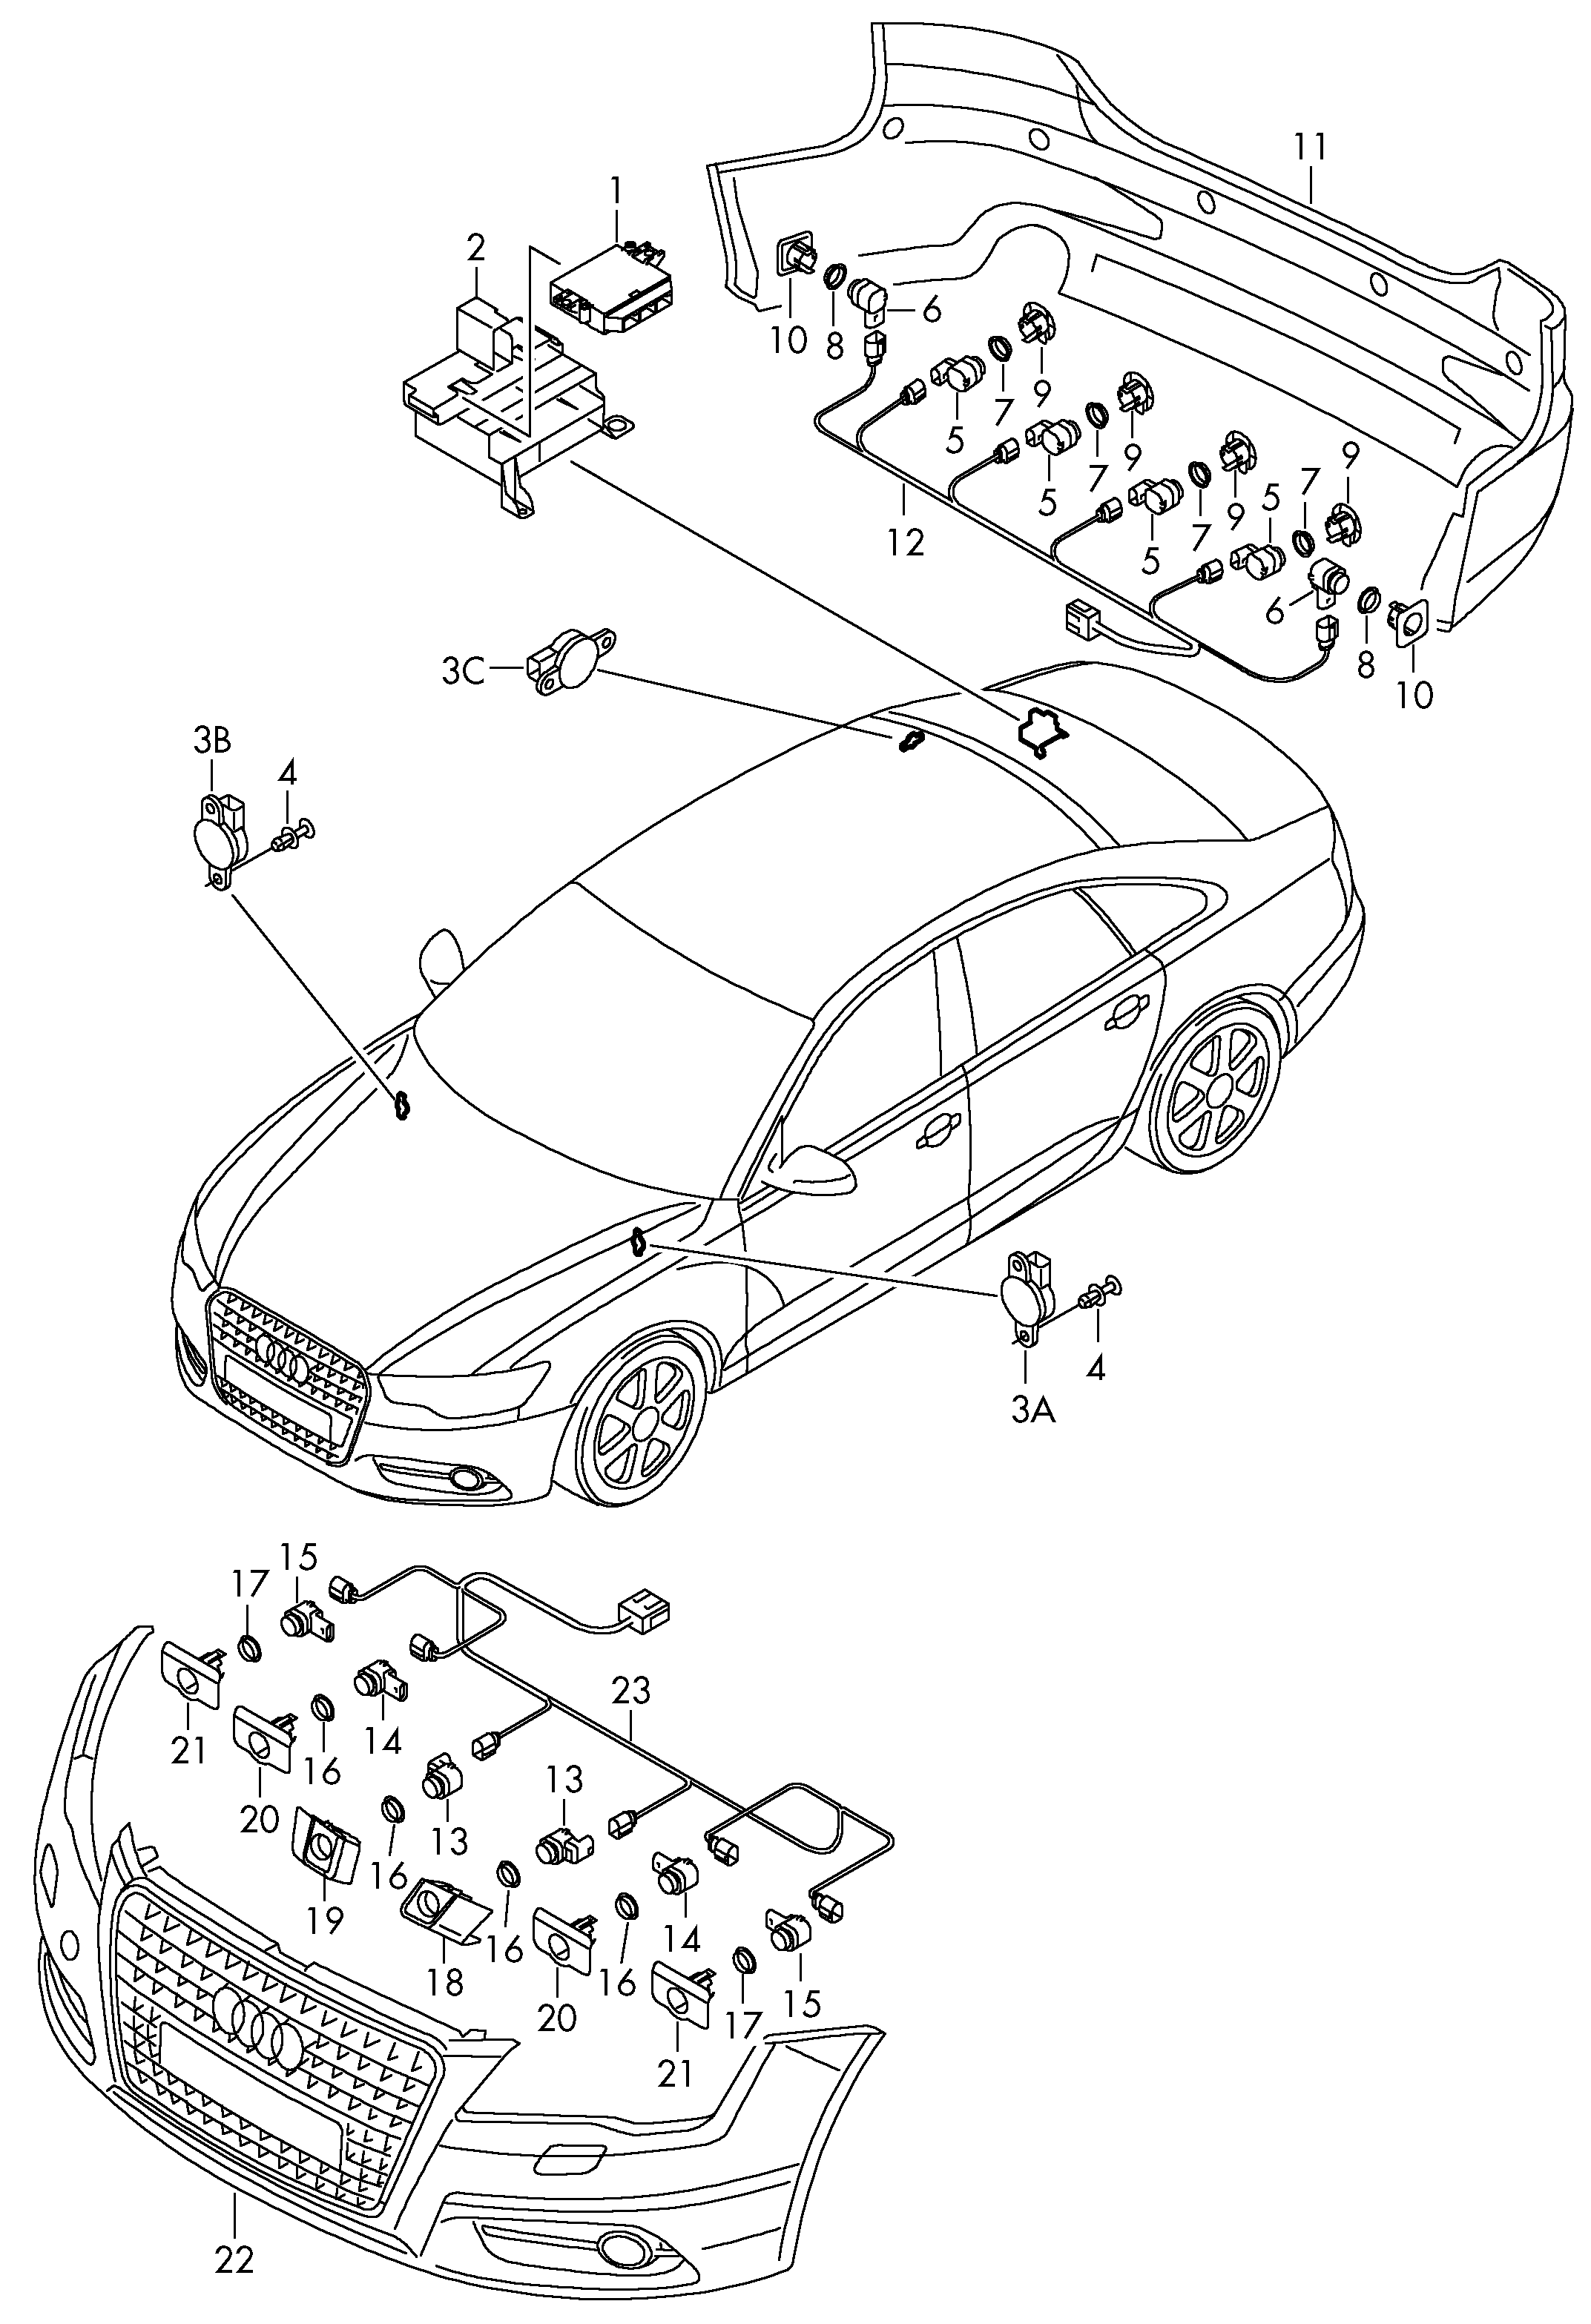 Quattro Freni QF00T01546 - Датчик, система помощи при парковке autodnr.net